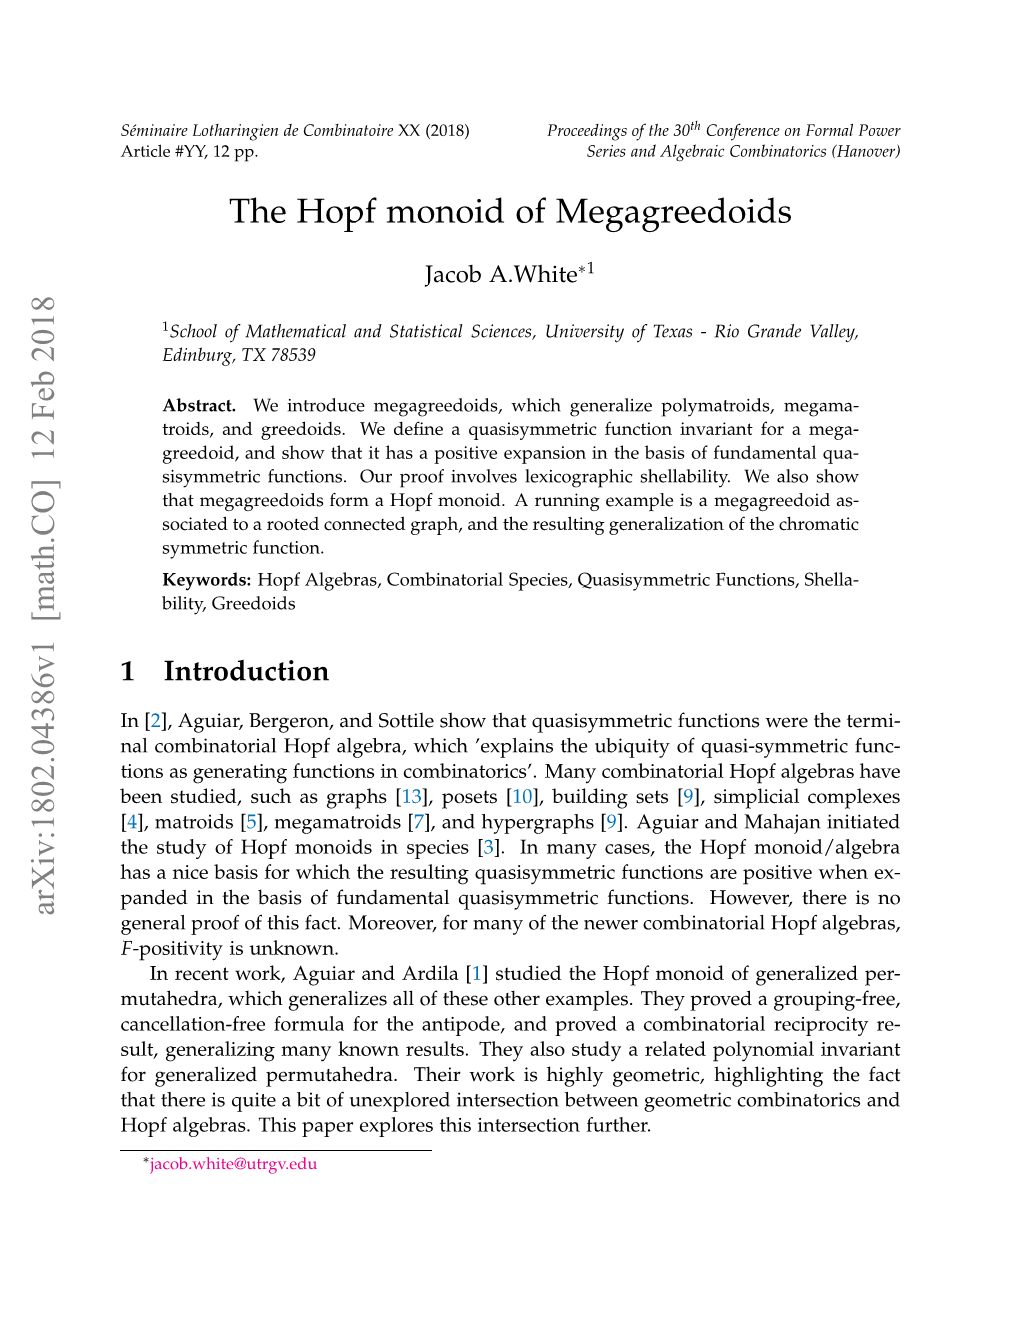 The Hopf Monoid of Megagreedoids 3